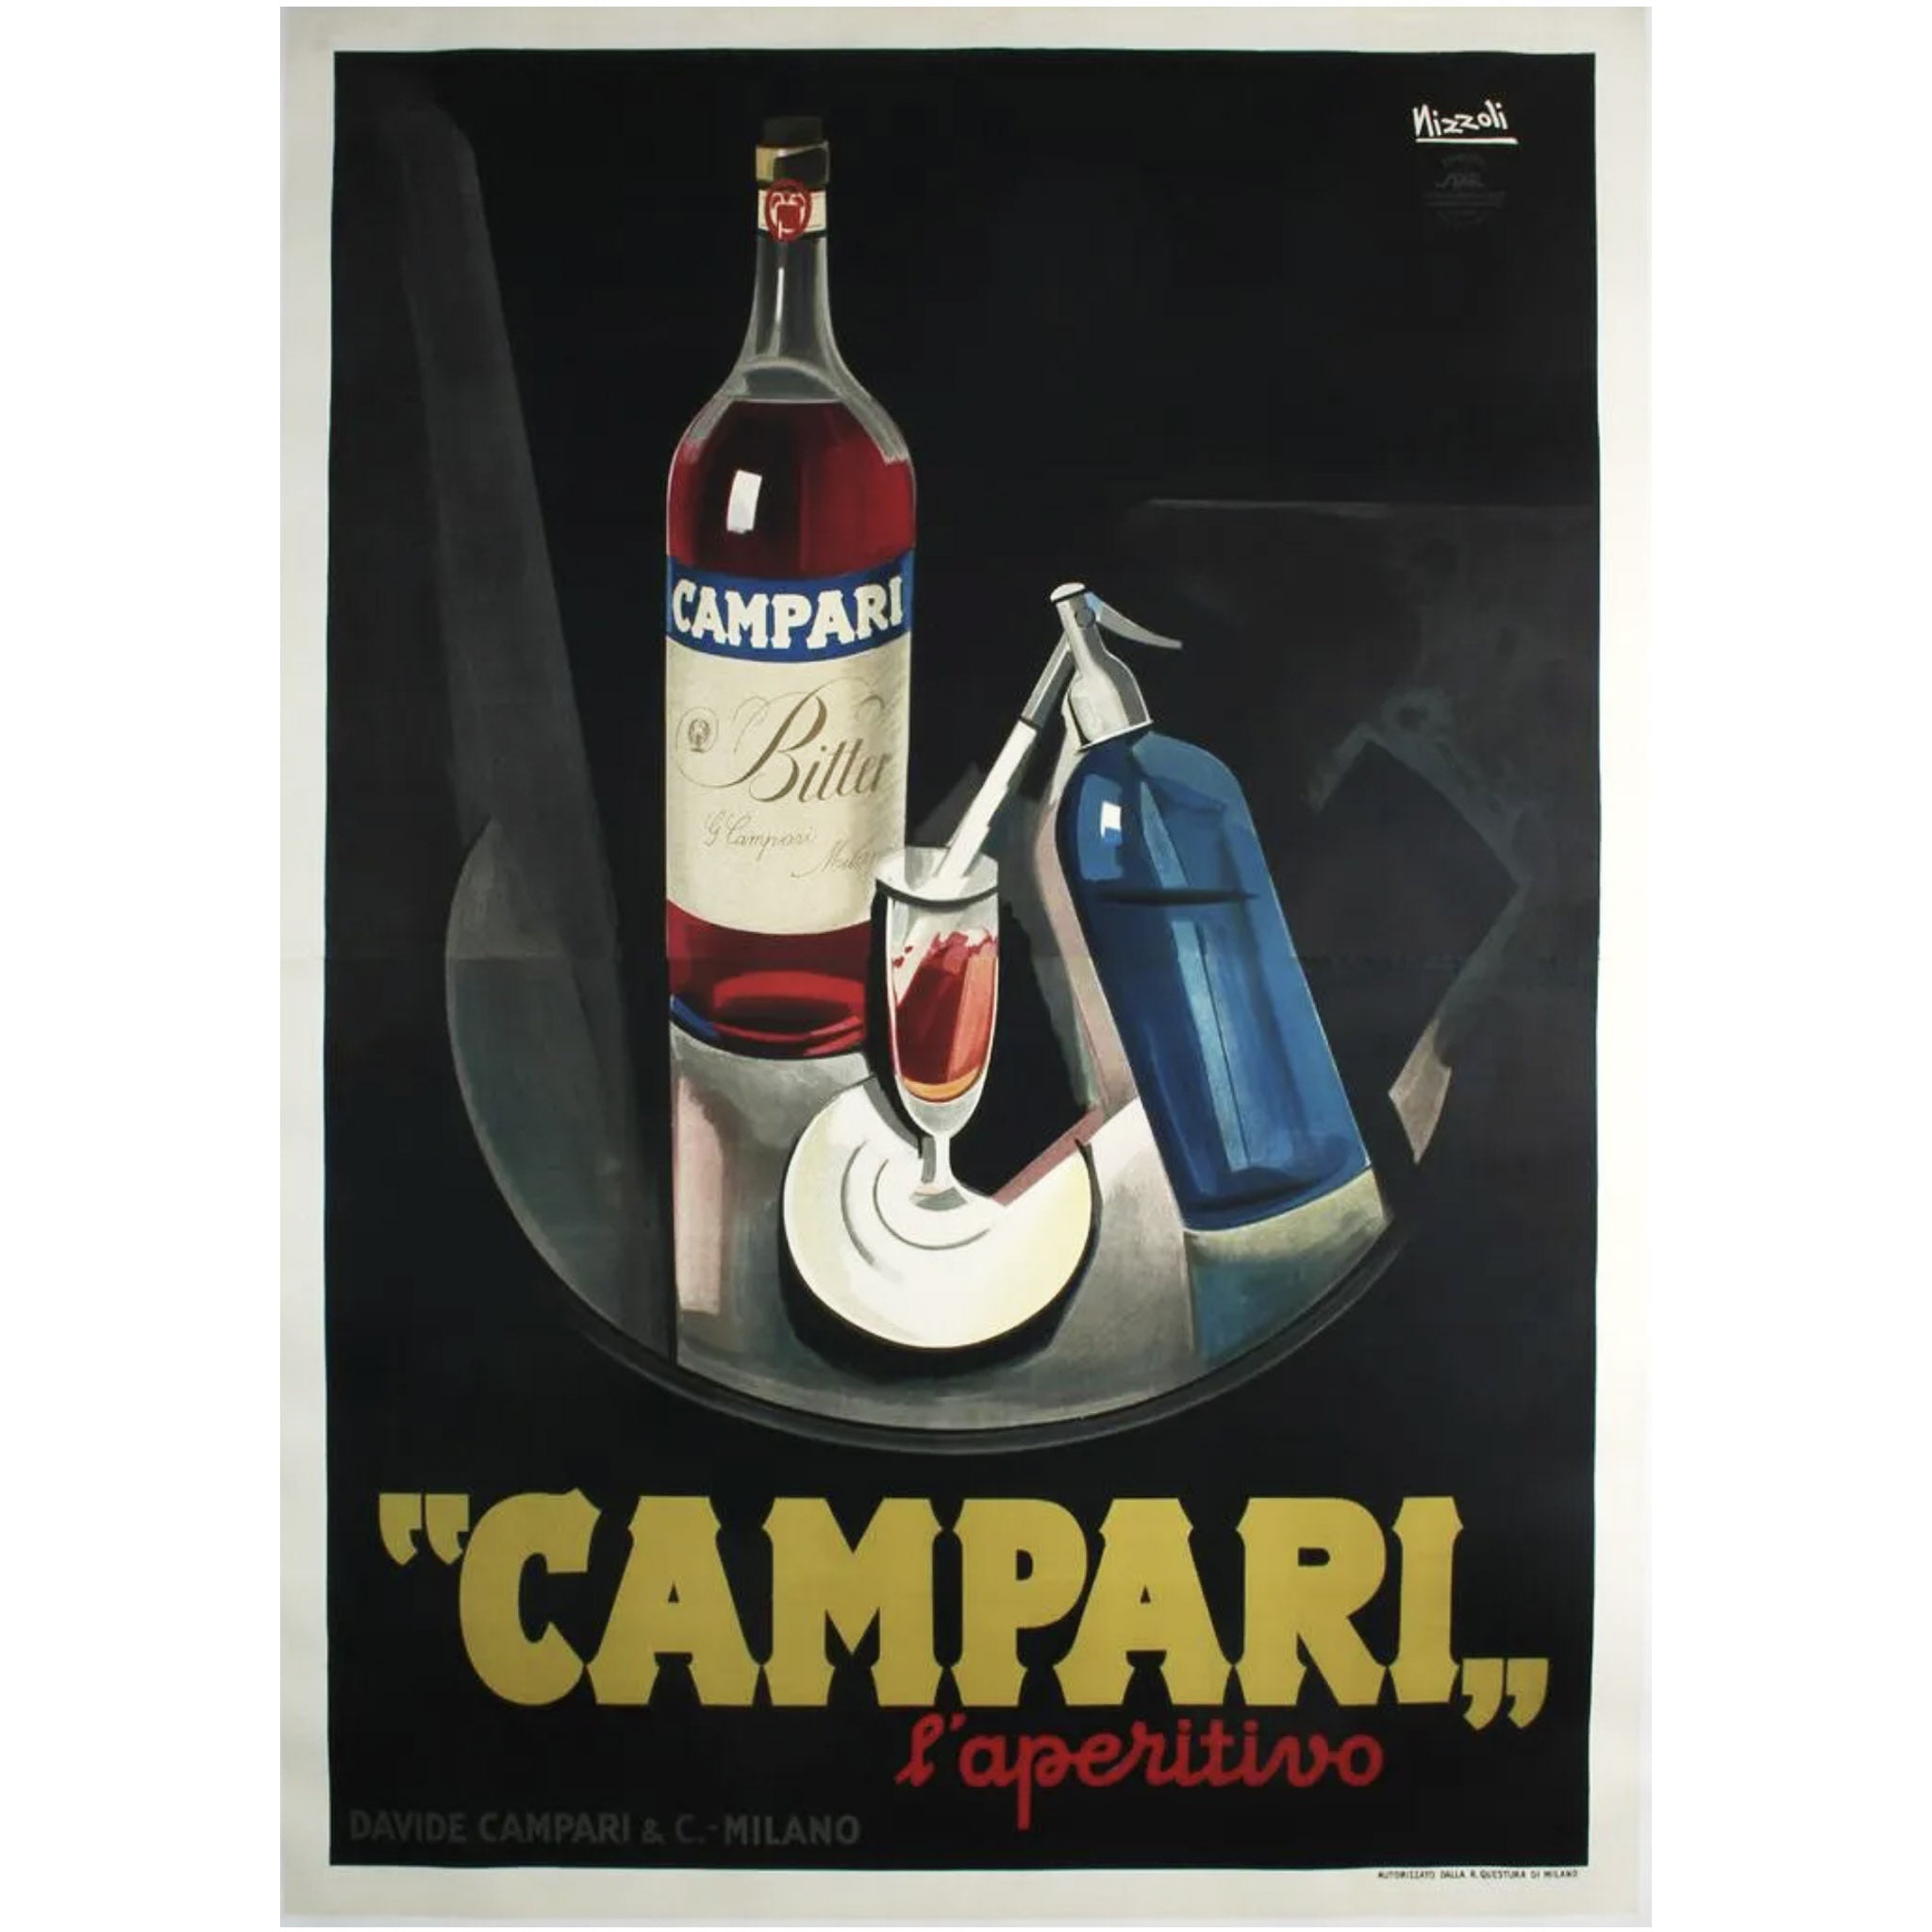 Original Art Deco Italian Campari Poster by Nizzoli, 1926